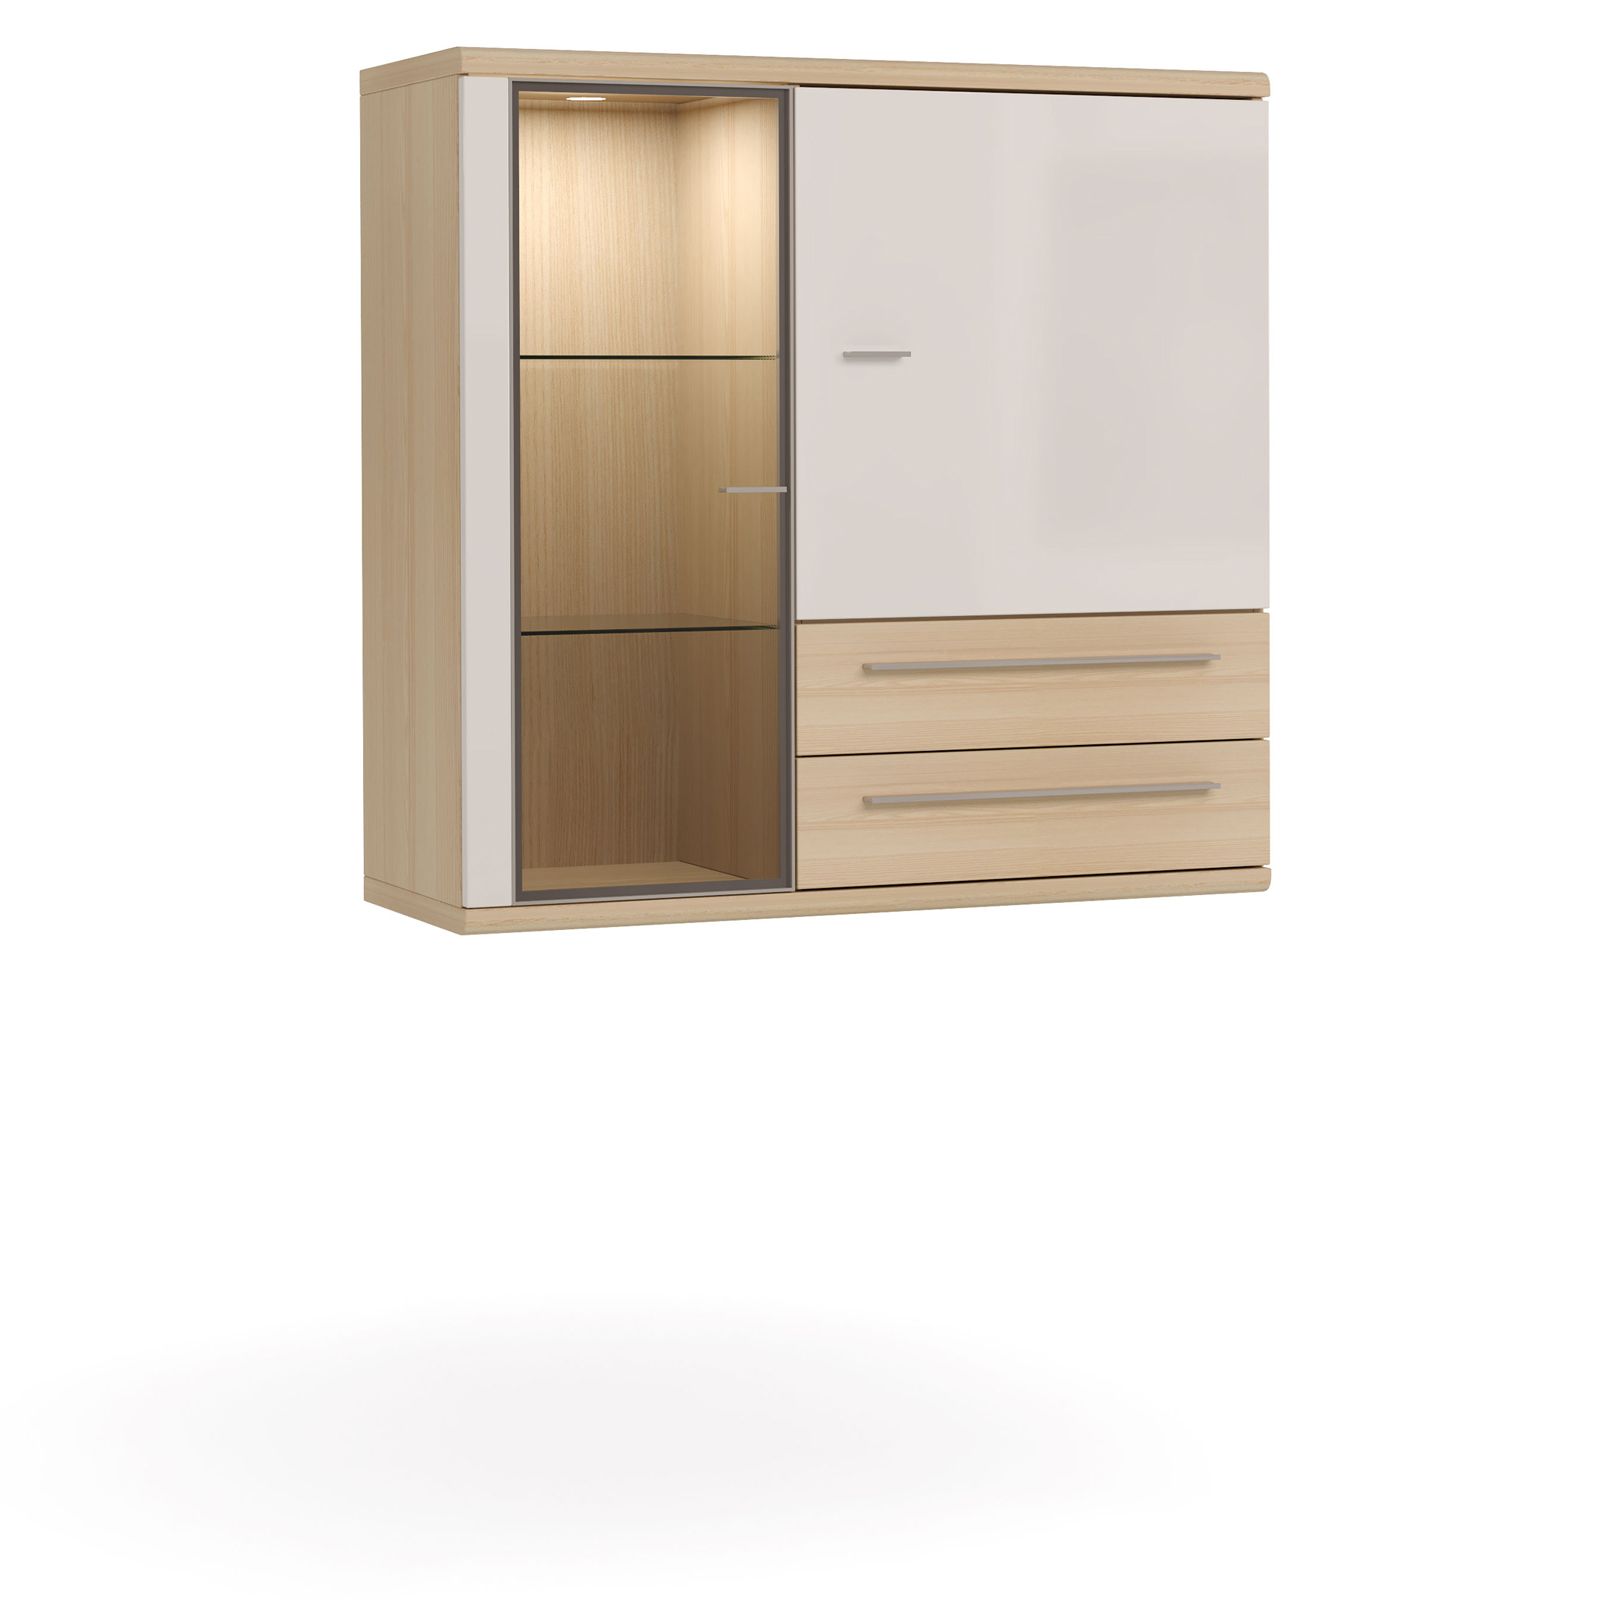 Шкаф Este настенный со светом coimbra/глянец белый ST512.2